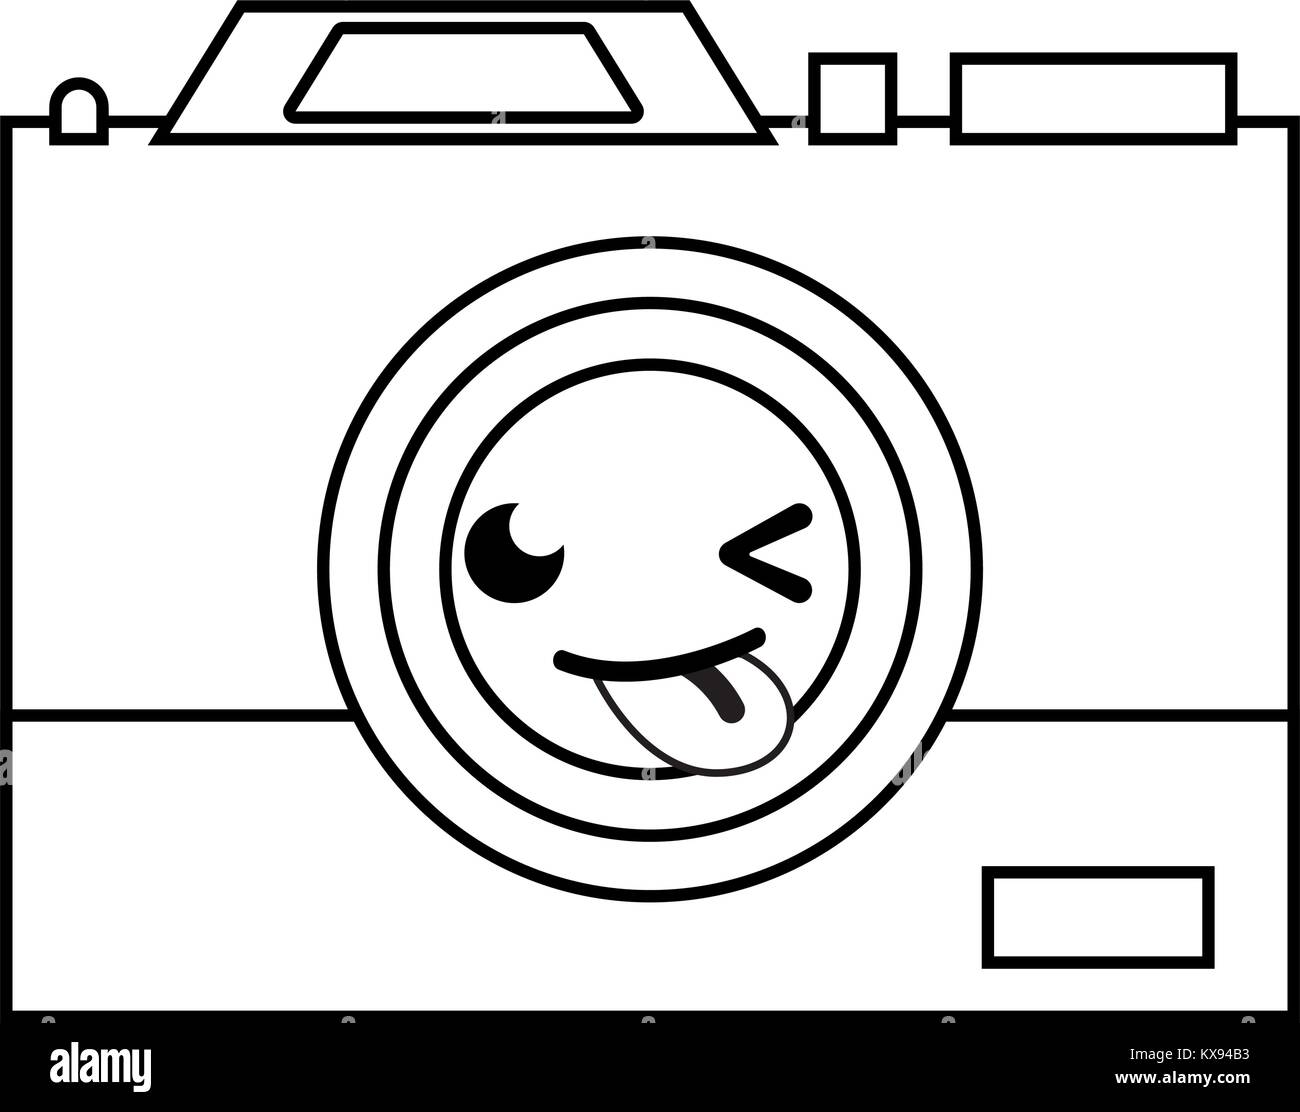 Tecnología de cámara divertida línea kawaii cartoon Imagen Vector de stock  - Alamy